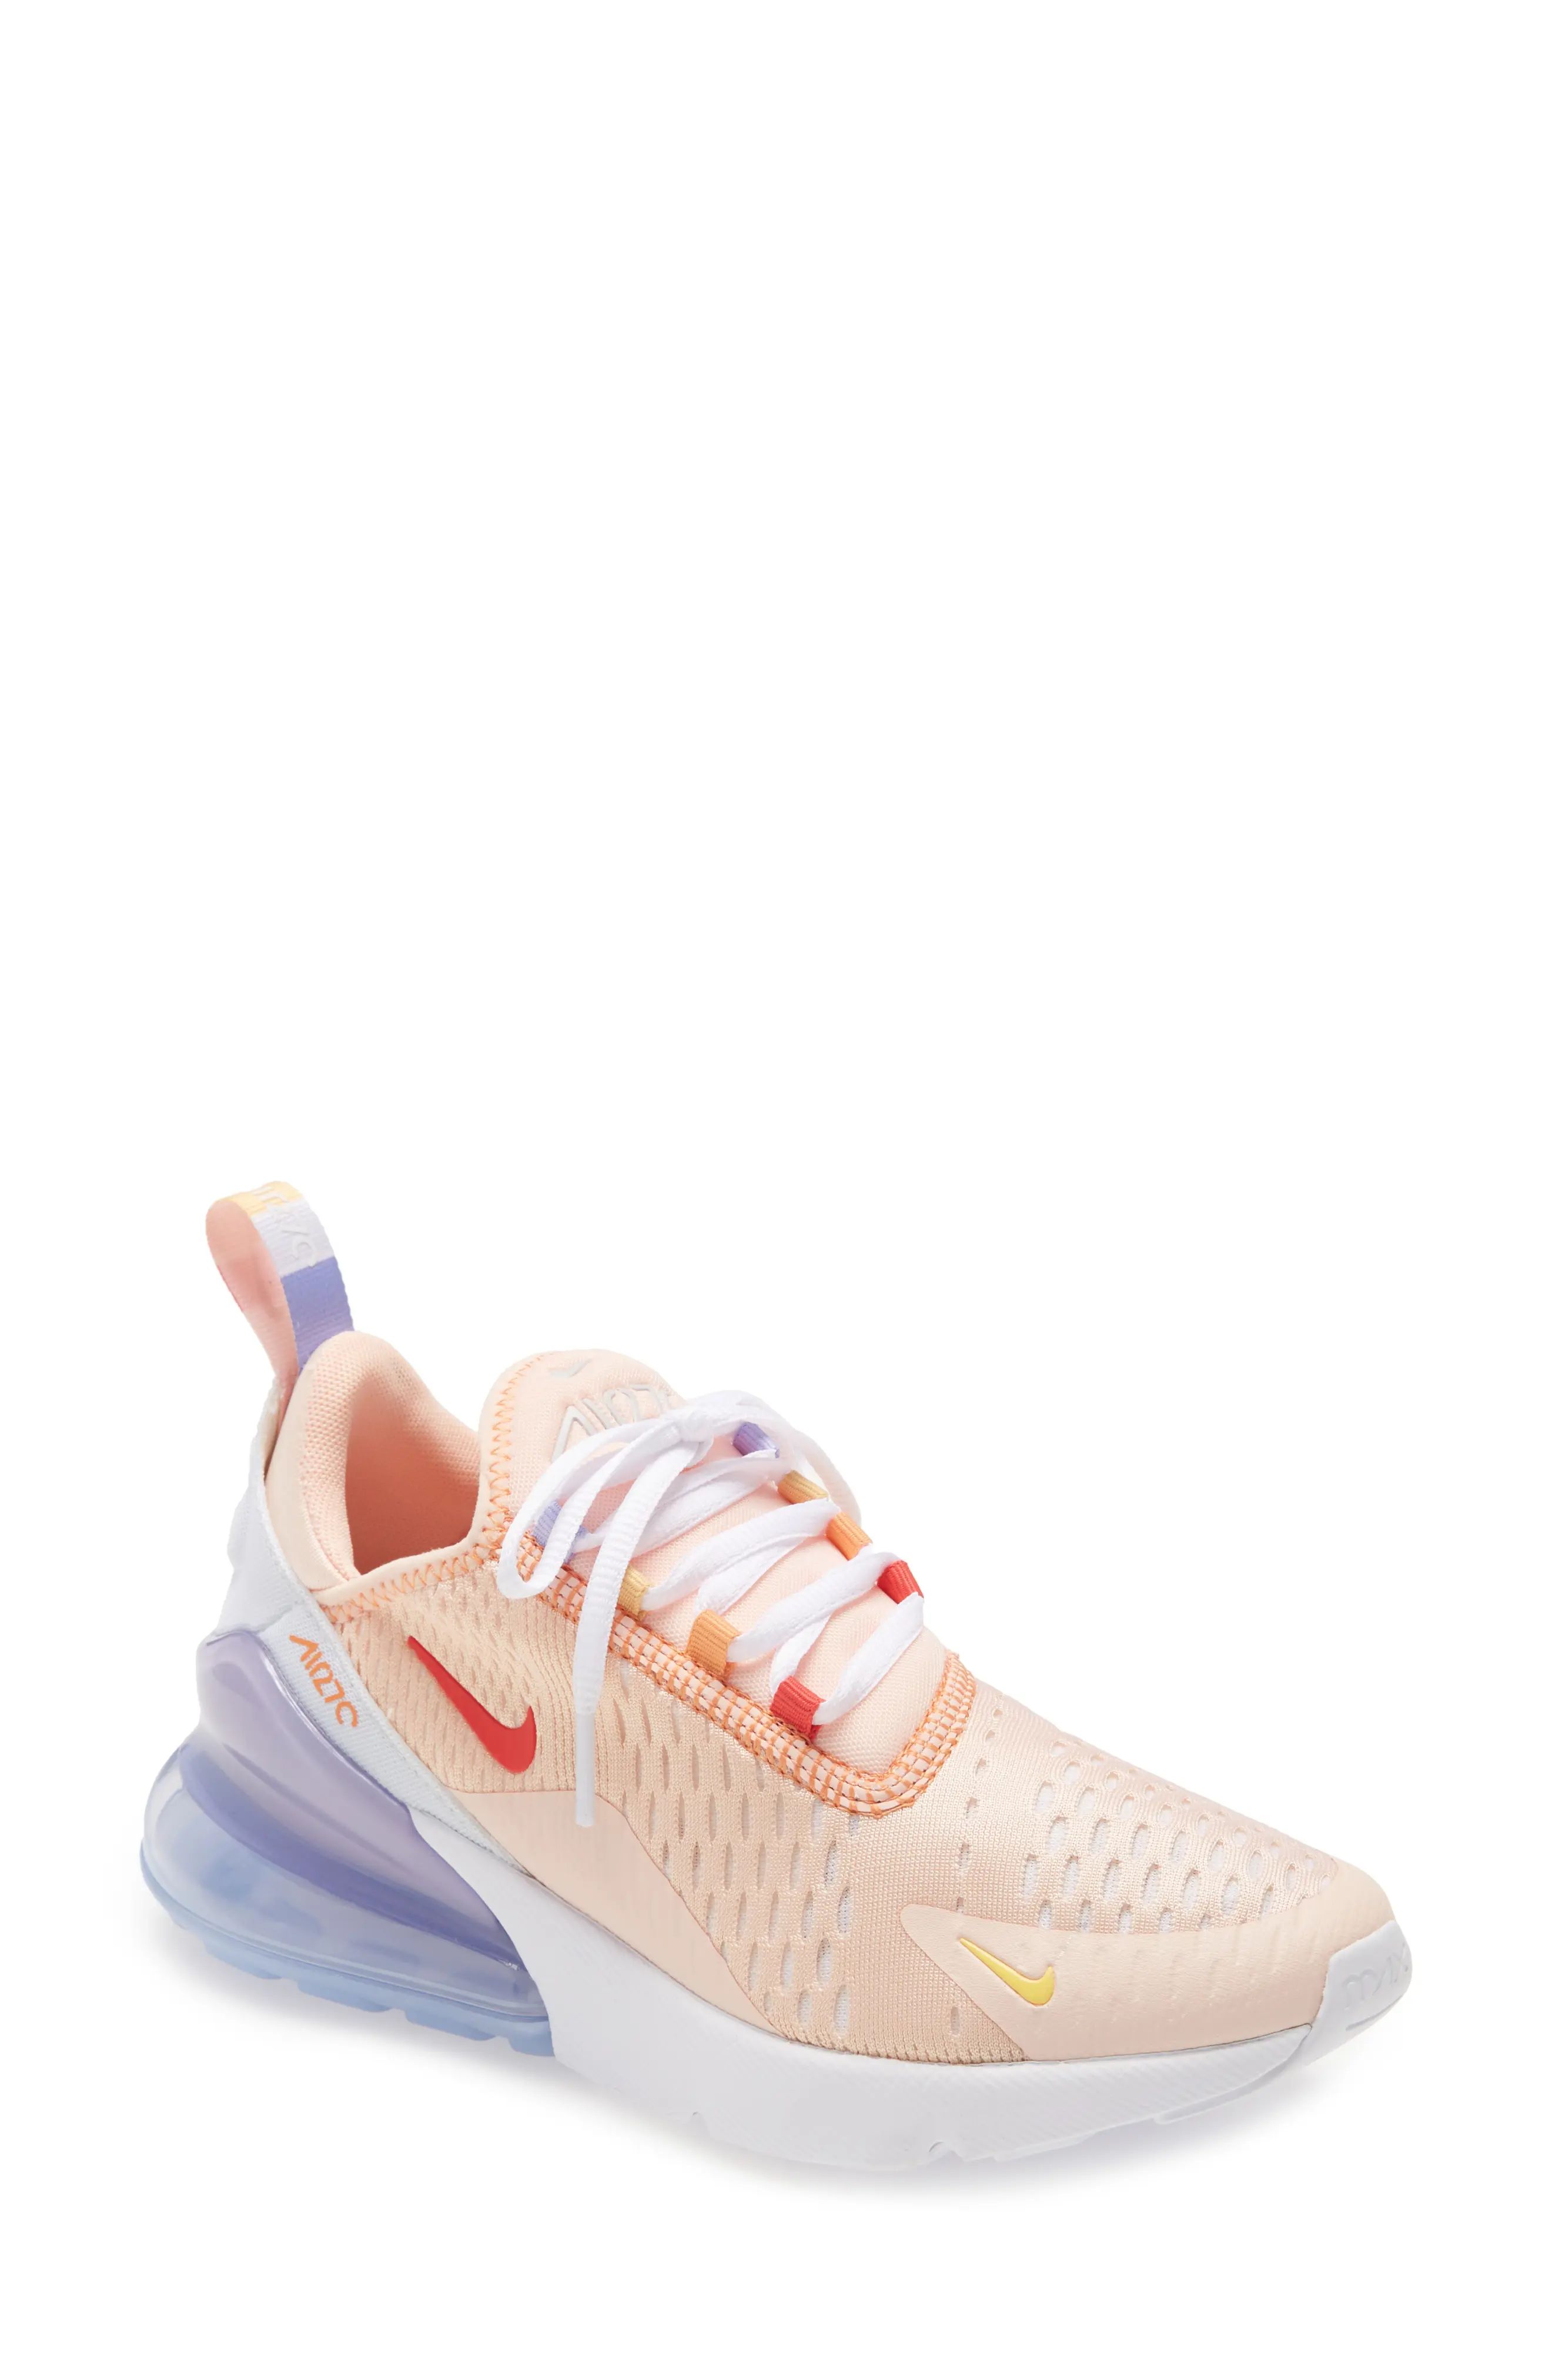 Women's Nike Air Max 270 Premium Sneaker, Size 5.5 M - Pink | Nordstrom